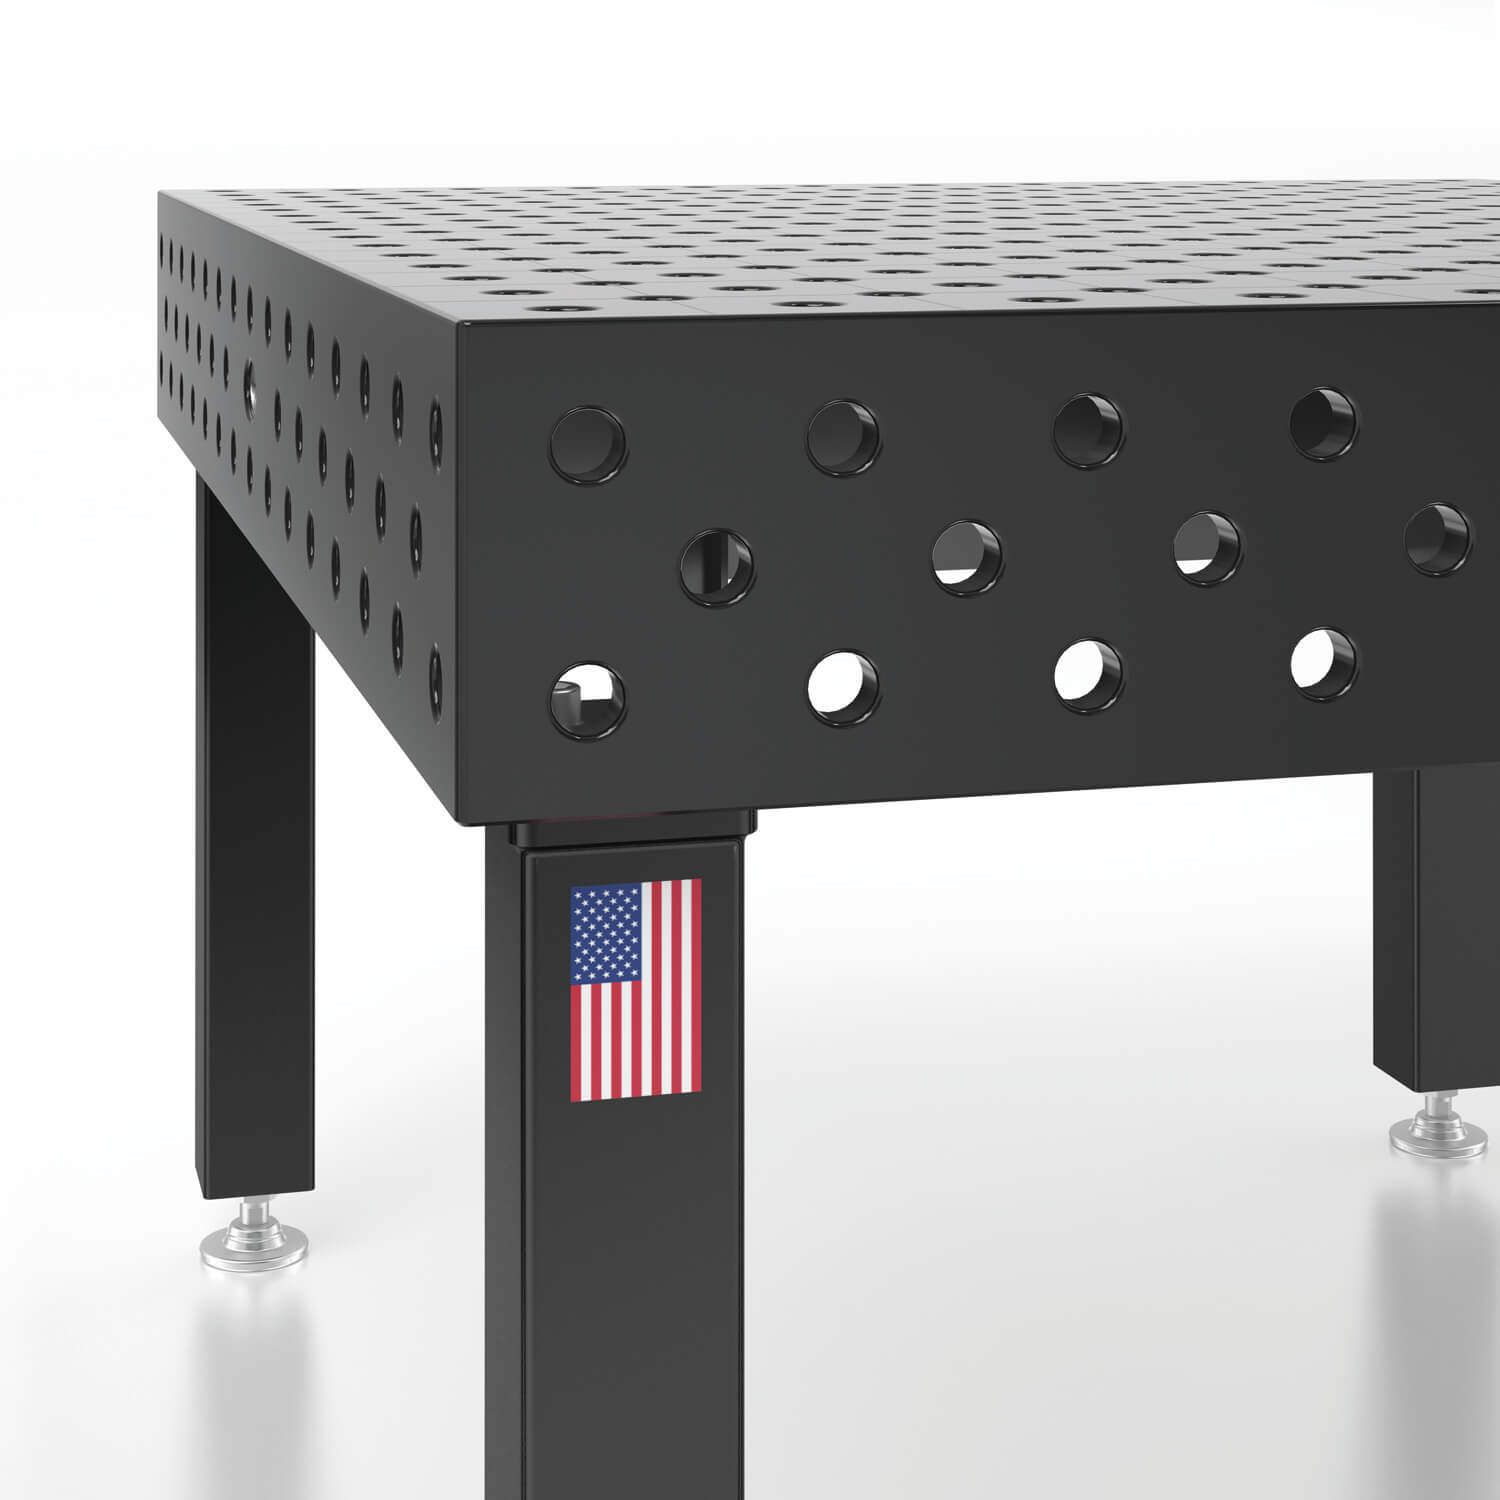 US280040.XD7: System 28 5'x10' (60"x120") Siegmund Imperial Series (Inch) Welding Table with Plasma Nitration